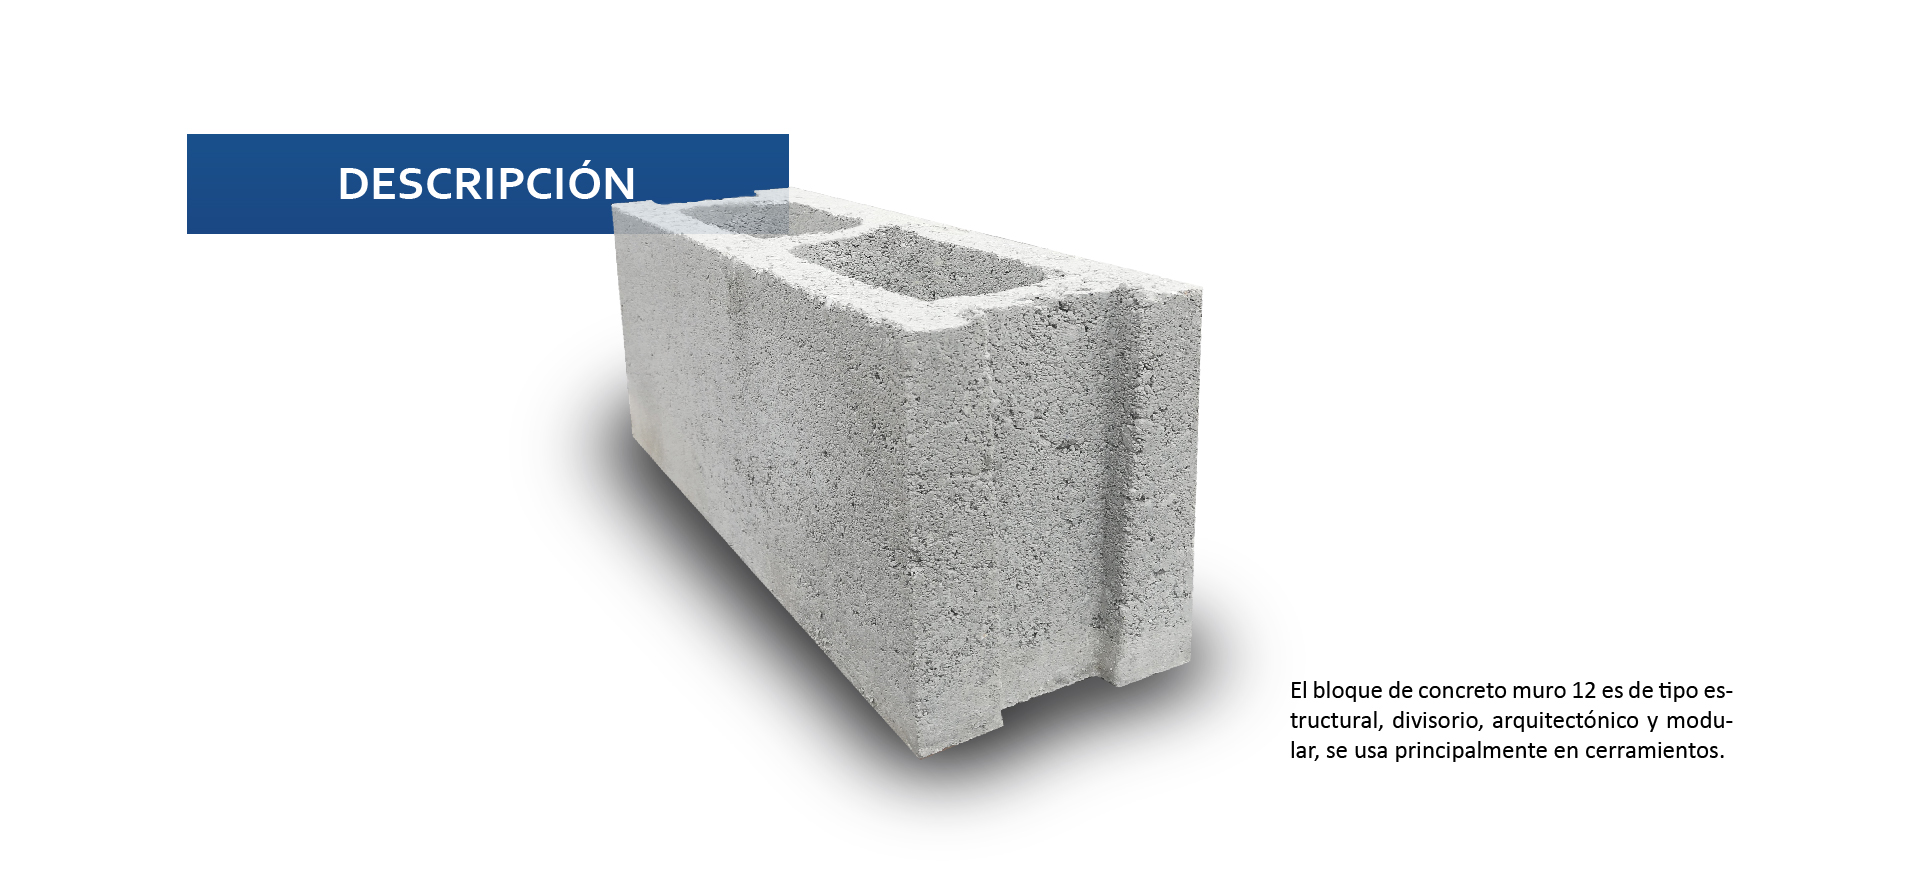 Descripcion bloque de concreto de muro 12